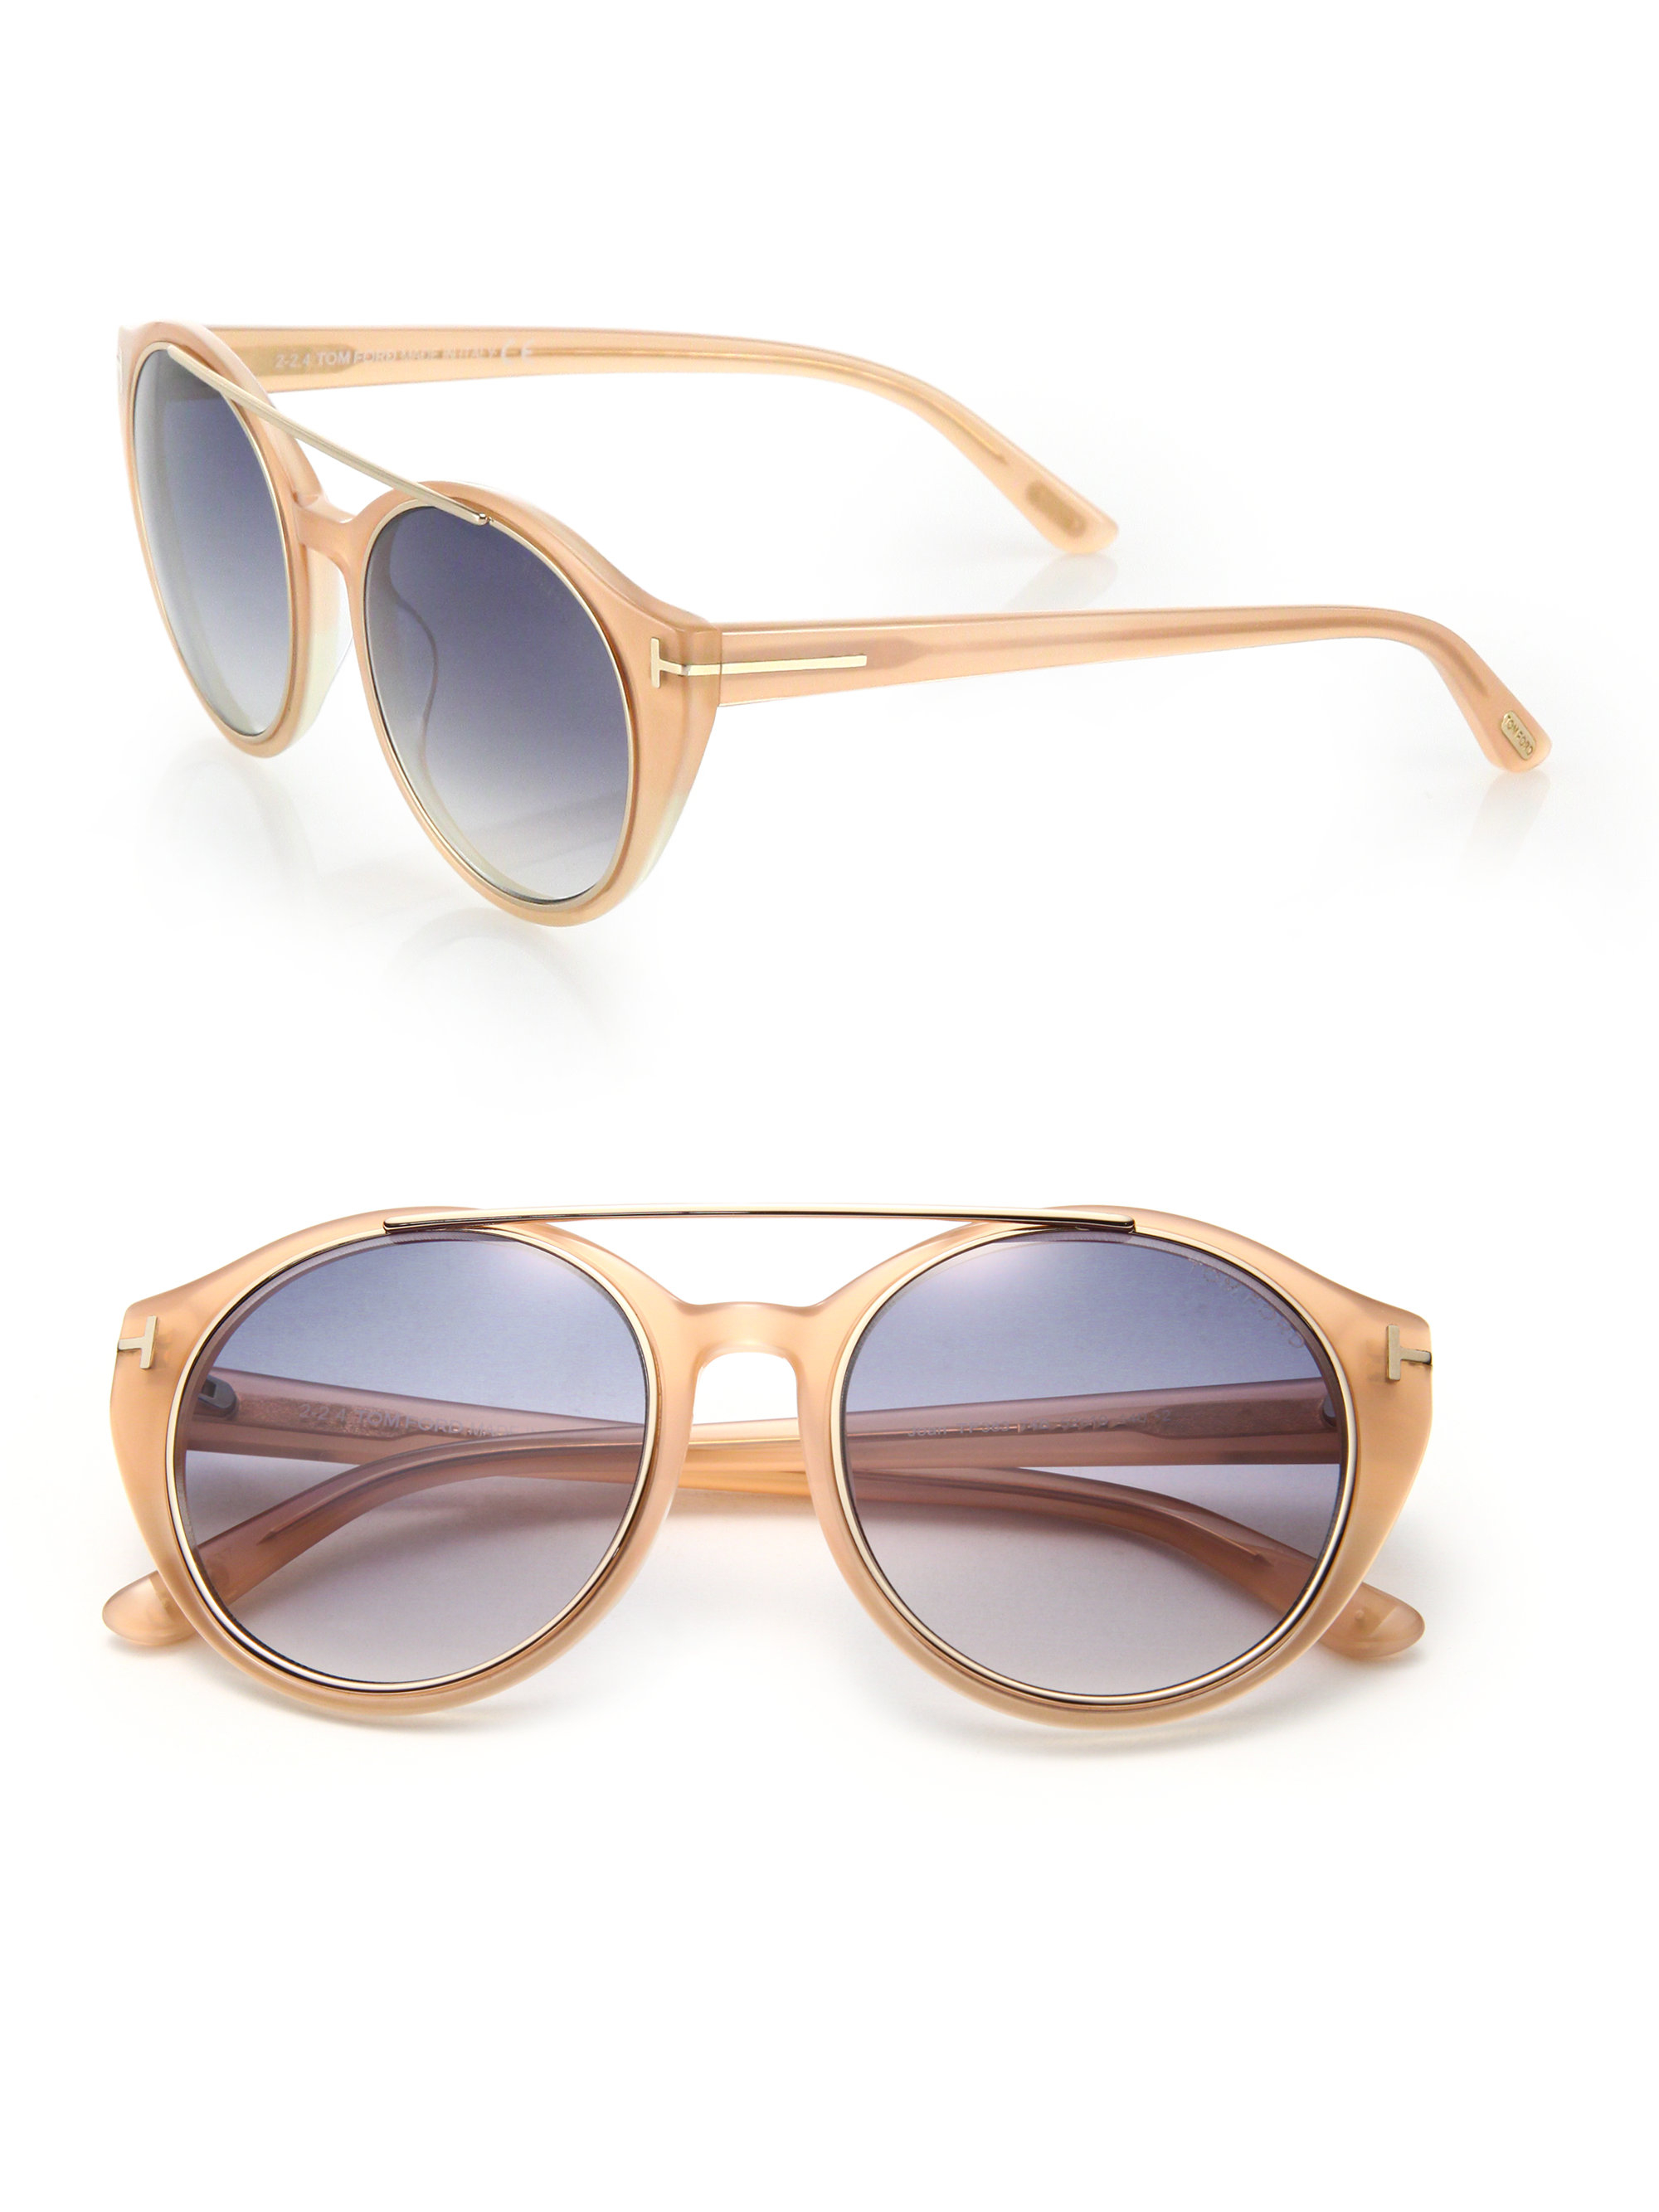 Lyst - Tom Ford Joan 52mm Cat's-eye Sunglasses in Orange